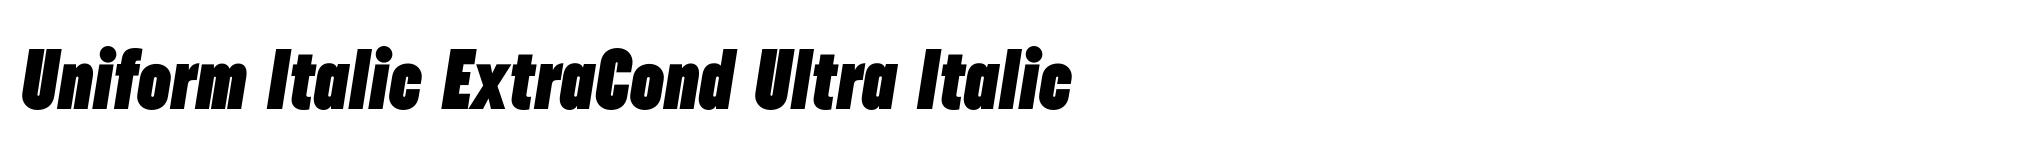 Uniform Italic ExtraCond Ultra Italic image